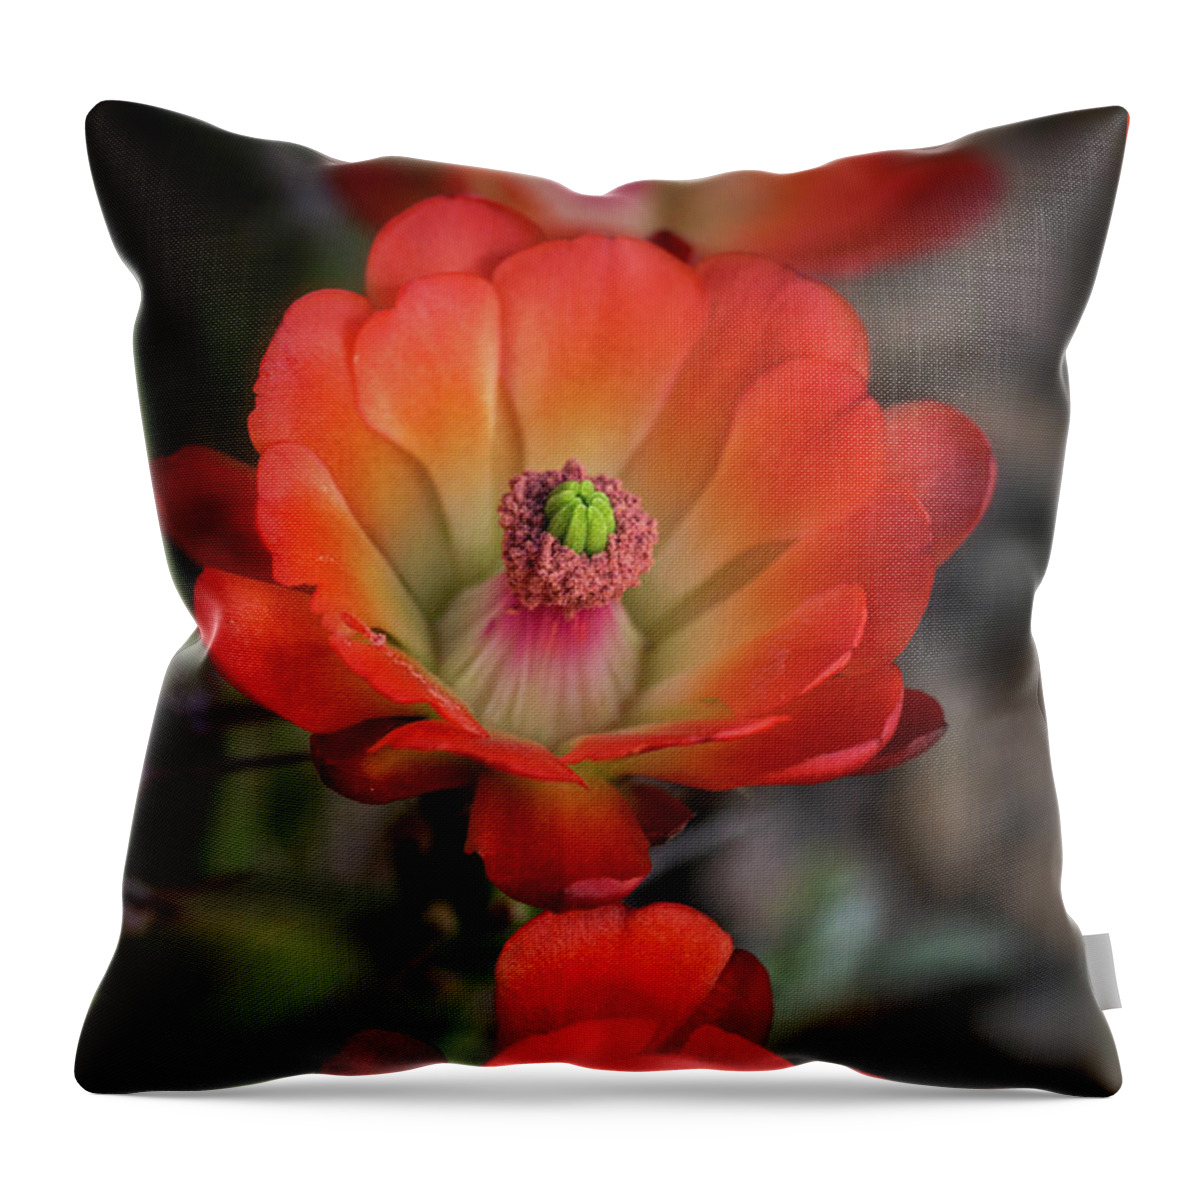 Claret Cup Cactus Throw Pillow featuring the photograph Orange Claret Dreams by Saija Lehtonen